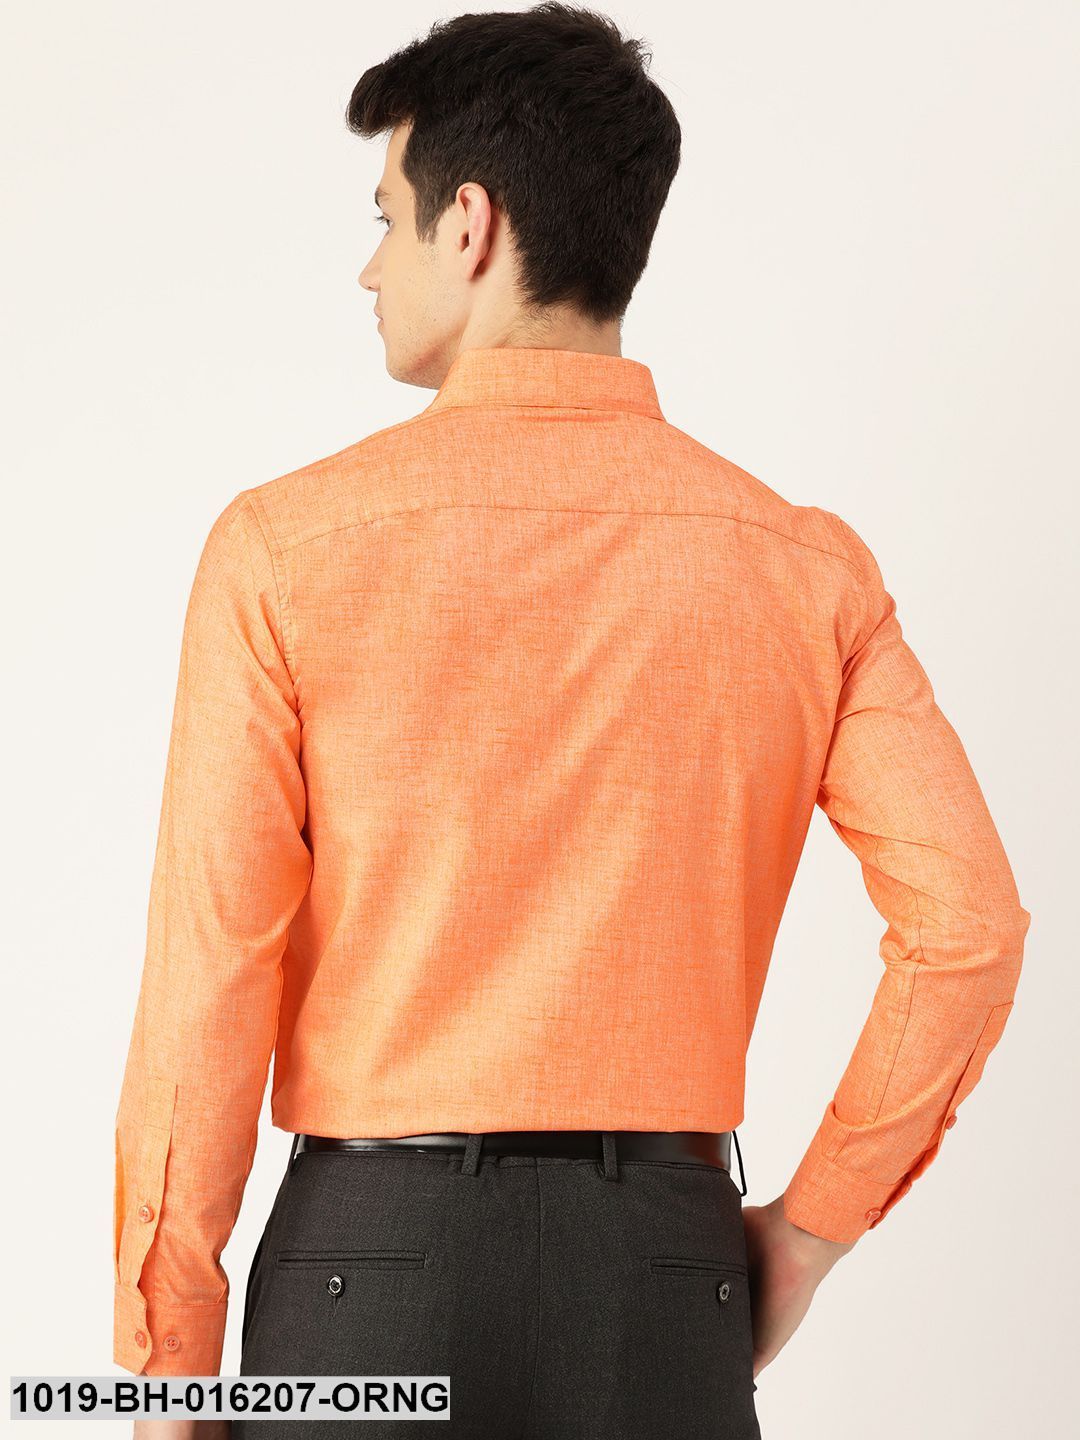 Men's Cotton Linen Orange Solid Formal Shirt - Sojanya